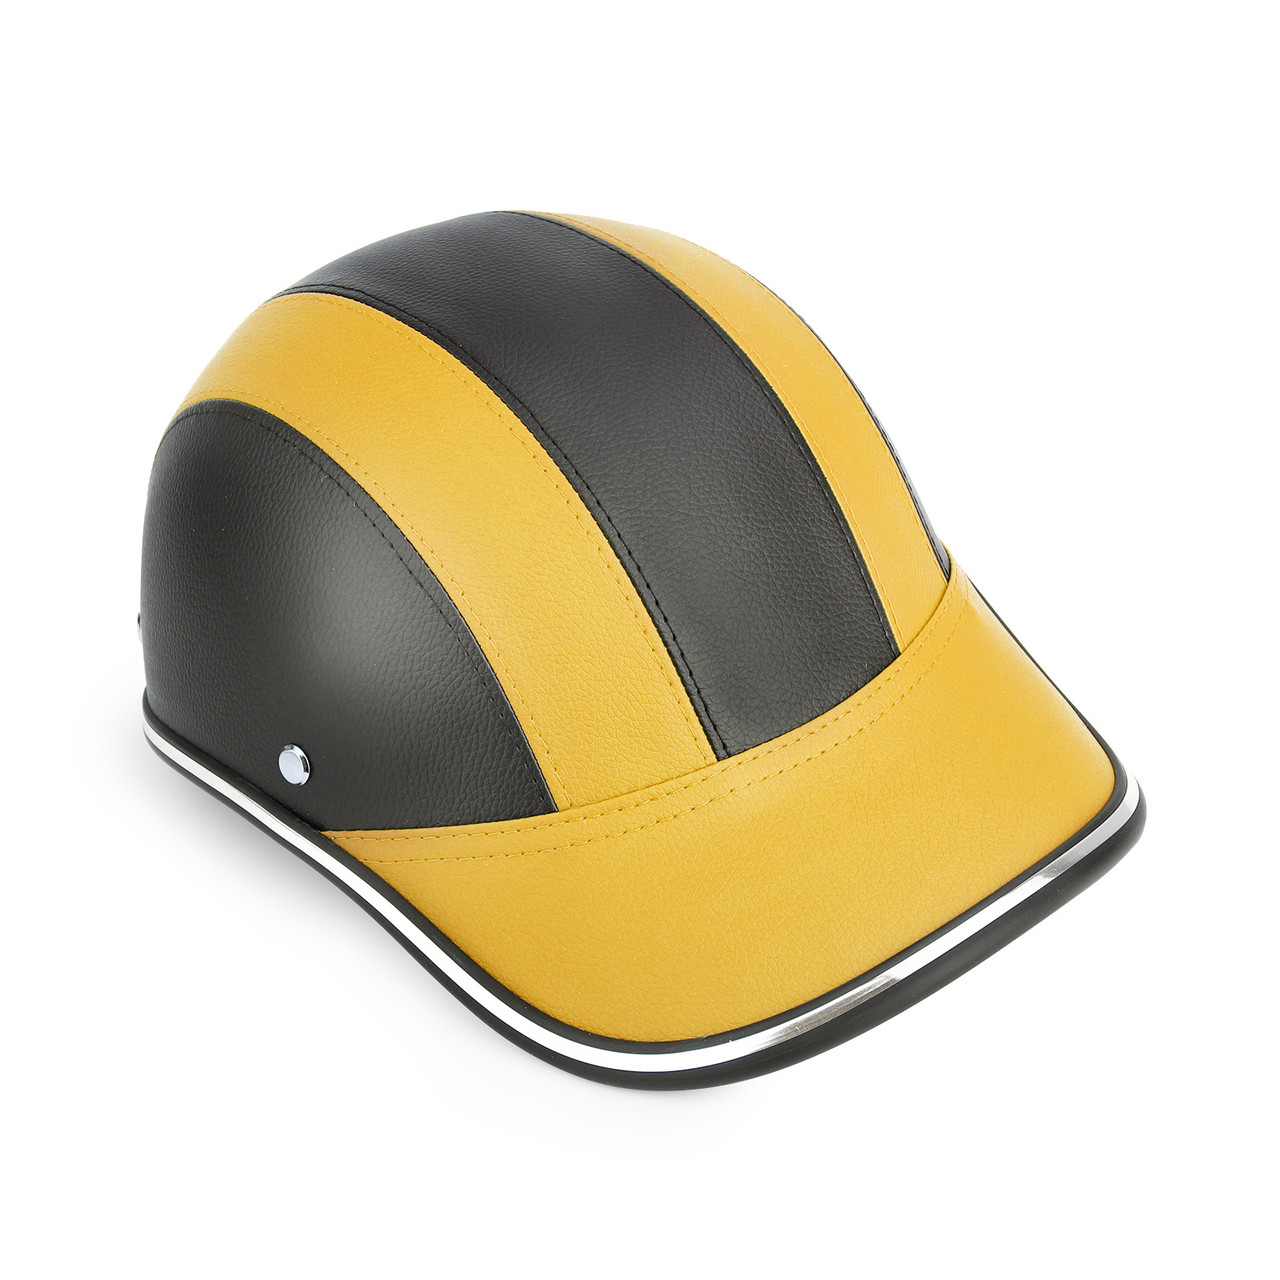 Unisex Bicycle Helmet MTB Road Cycling Mountain Bike Sports Safety Helmet Yellow